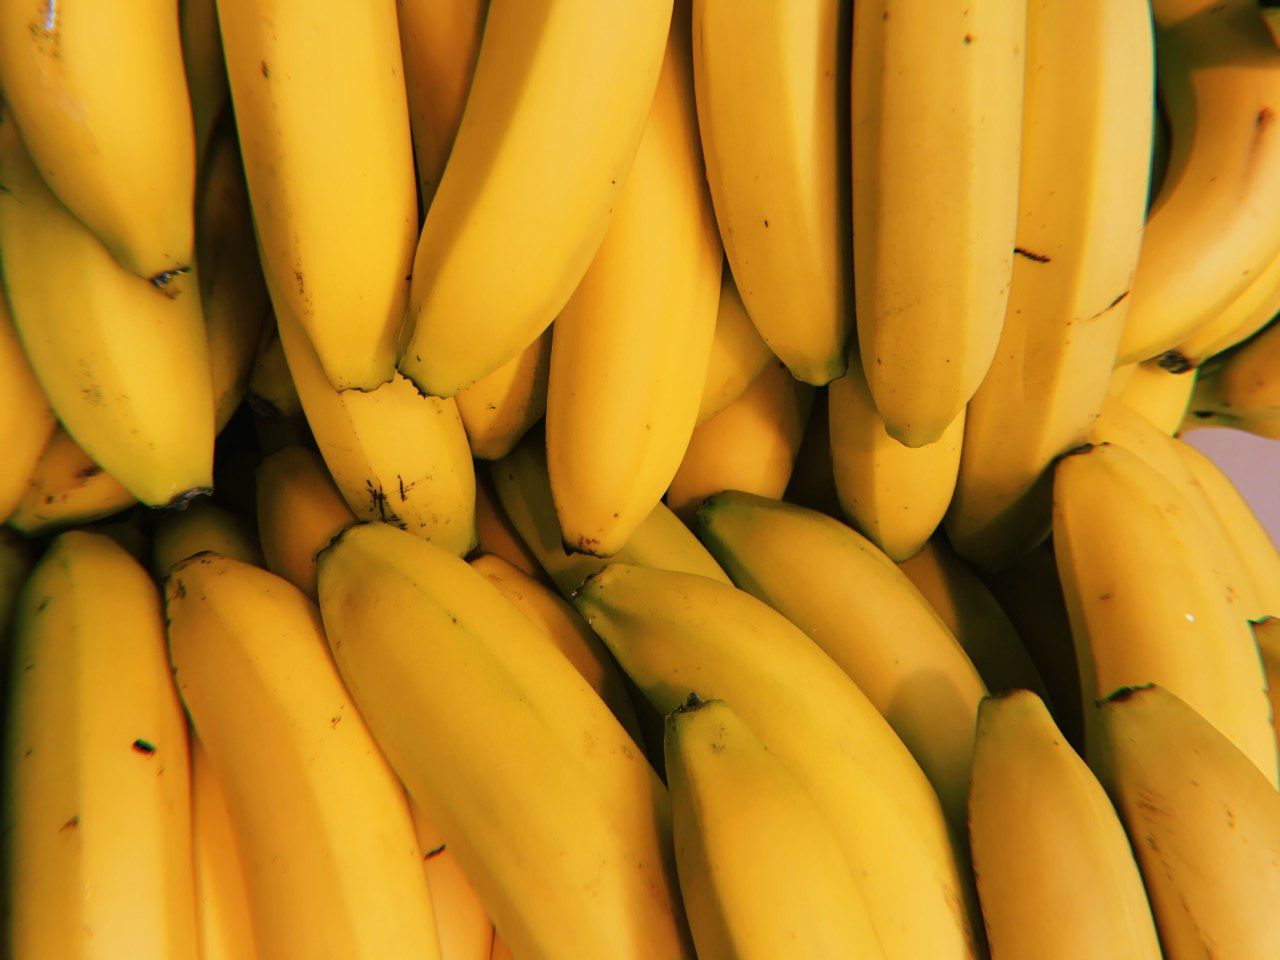 Mitos e verdades sobre os benefícios da banana para a saúde » Avoador